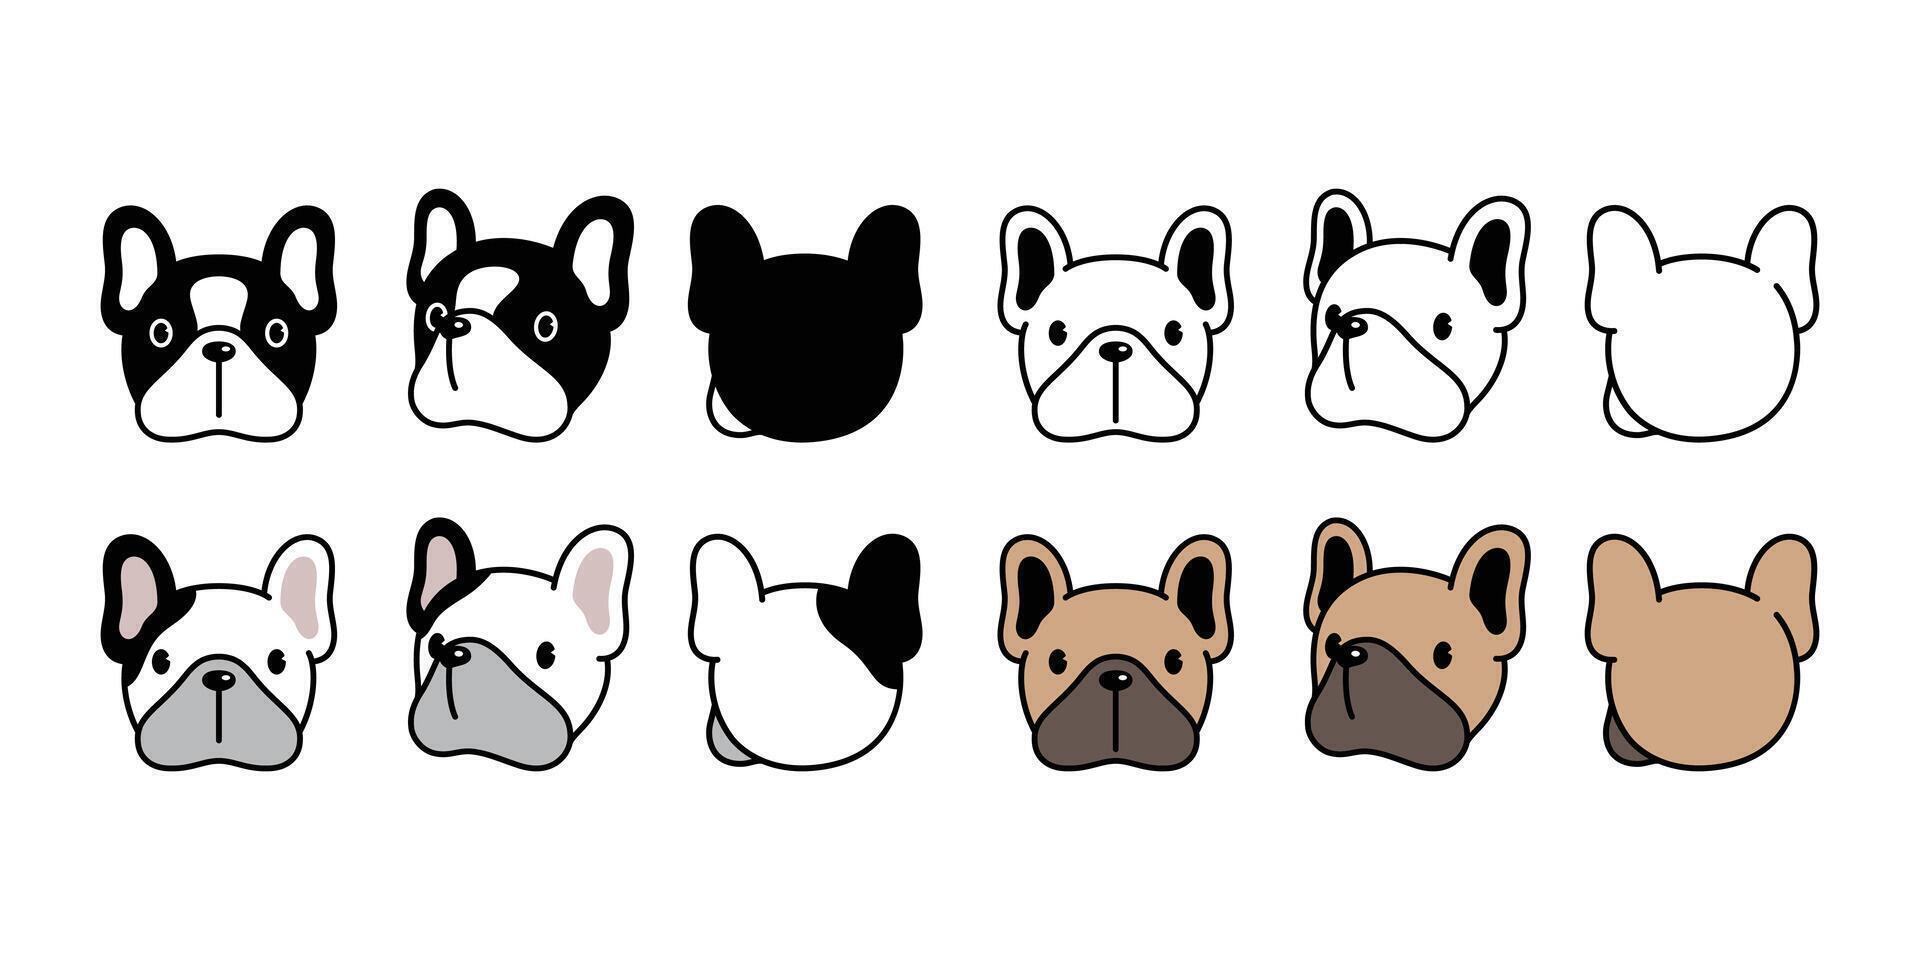 dog vector french bulldog icon face head cartoon character symbol doodle illustration design